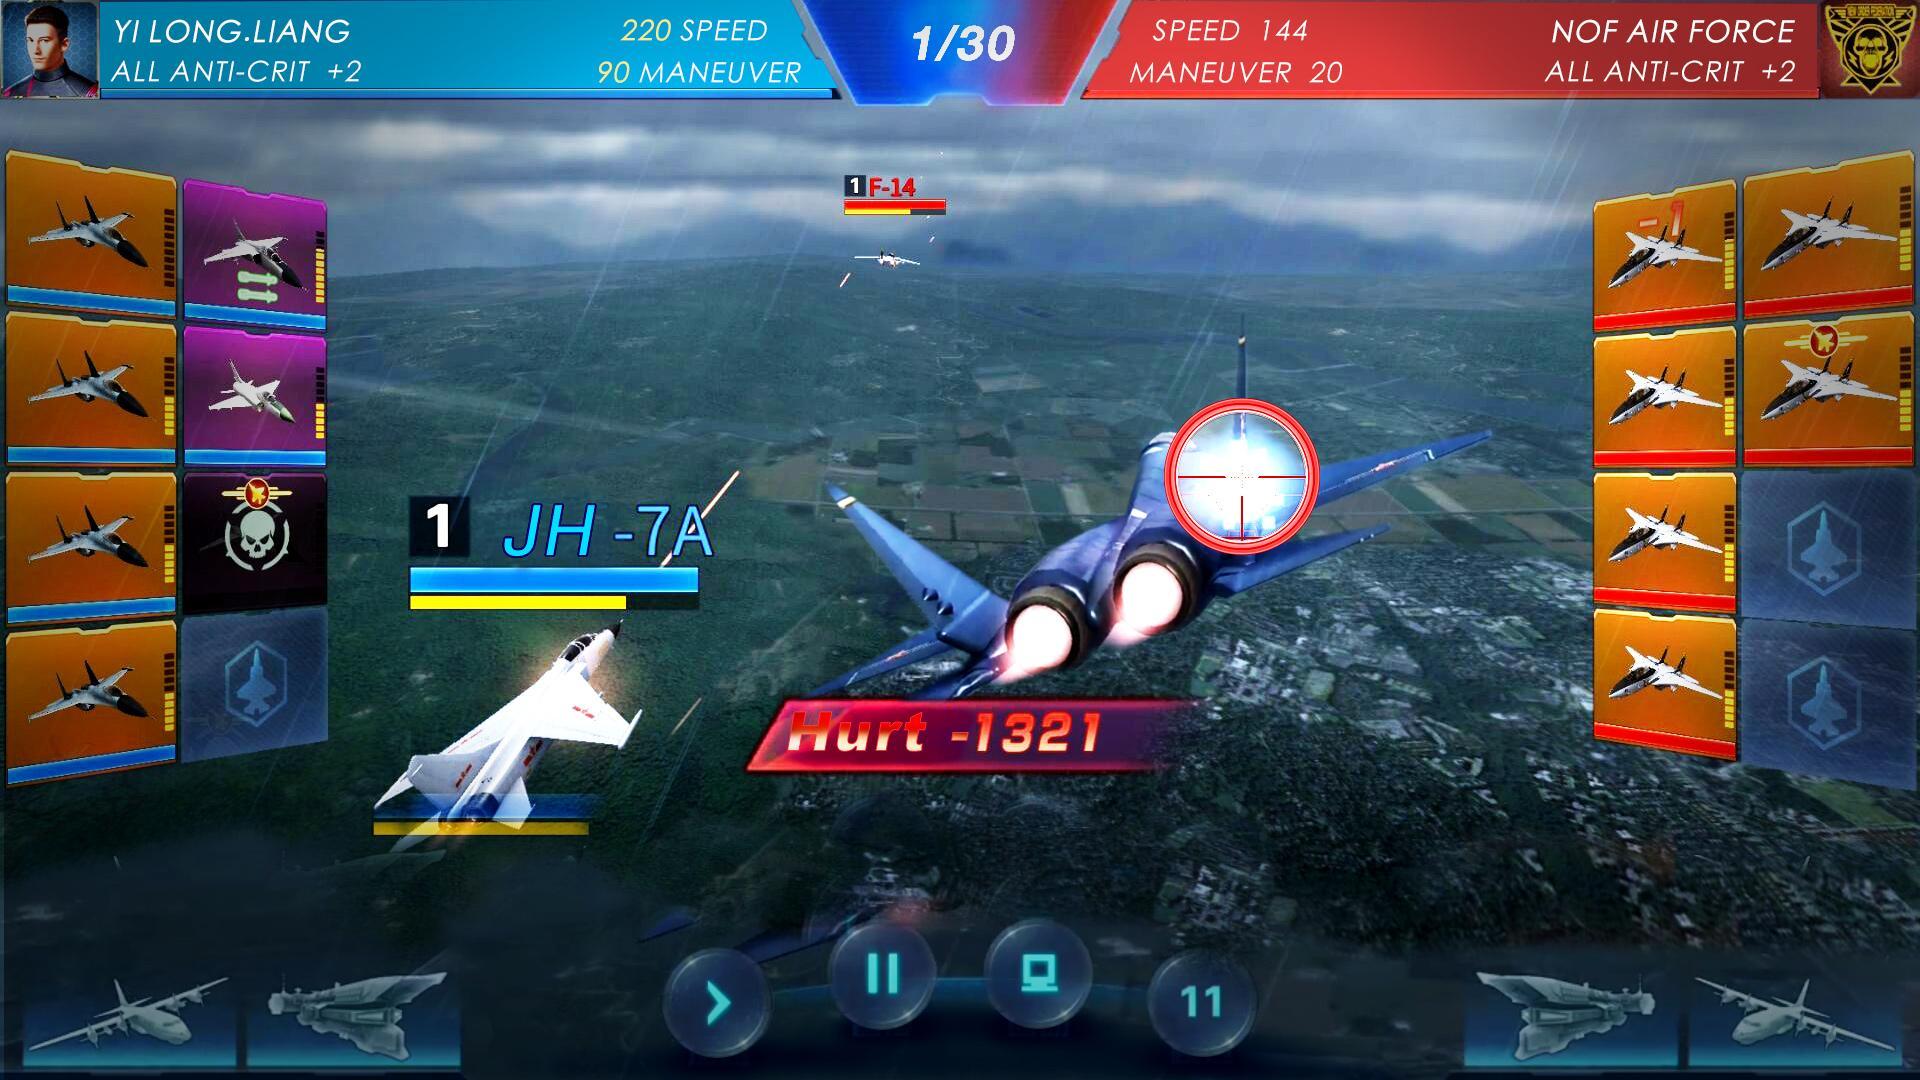 Steel Warhawk screenshot game